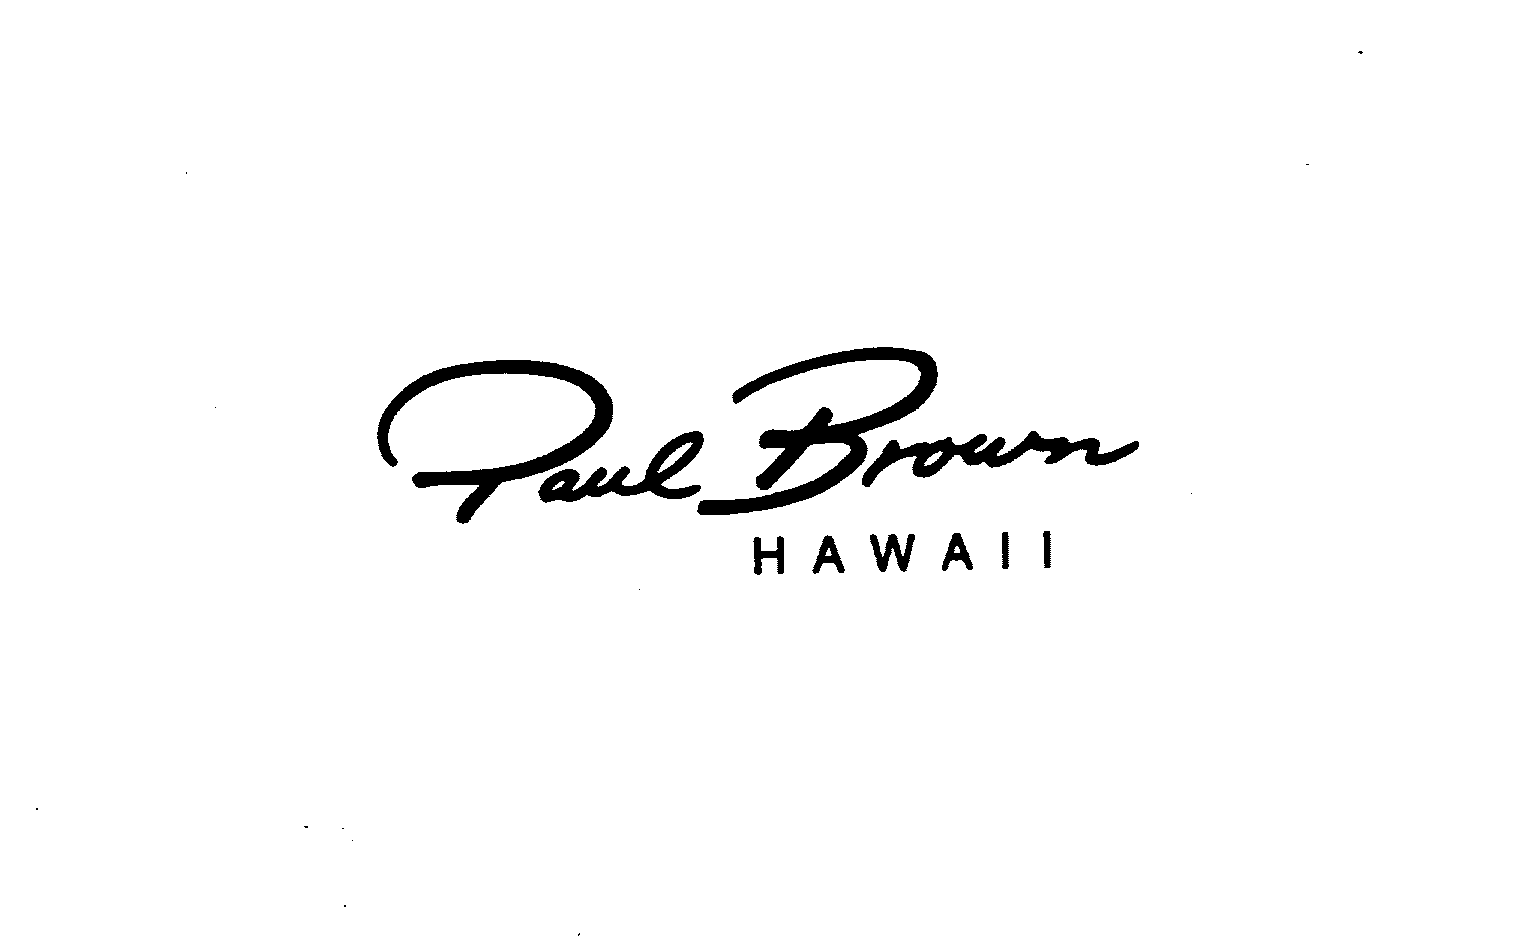  PAUL BROWN HAWAII